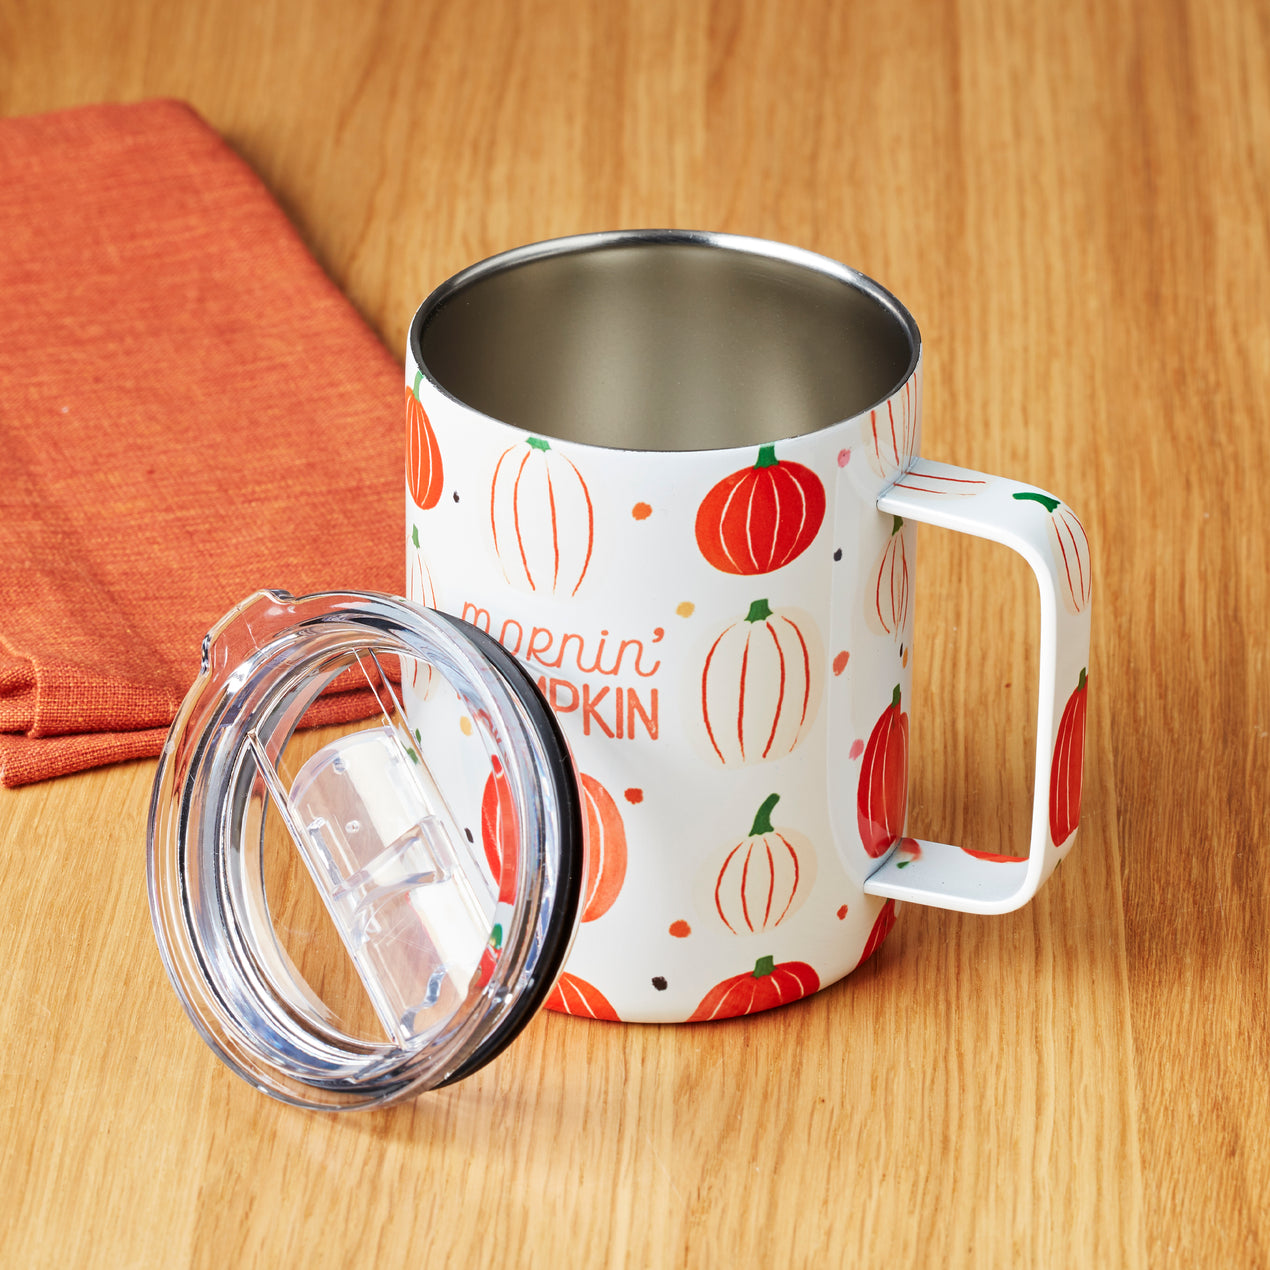 Thirstystone 16 oz. Hello Fall Insulated Coffee Mugs (Set of 2